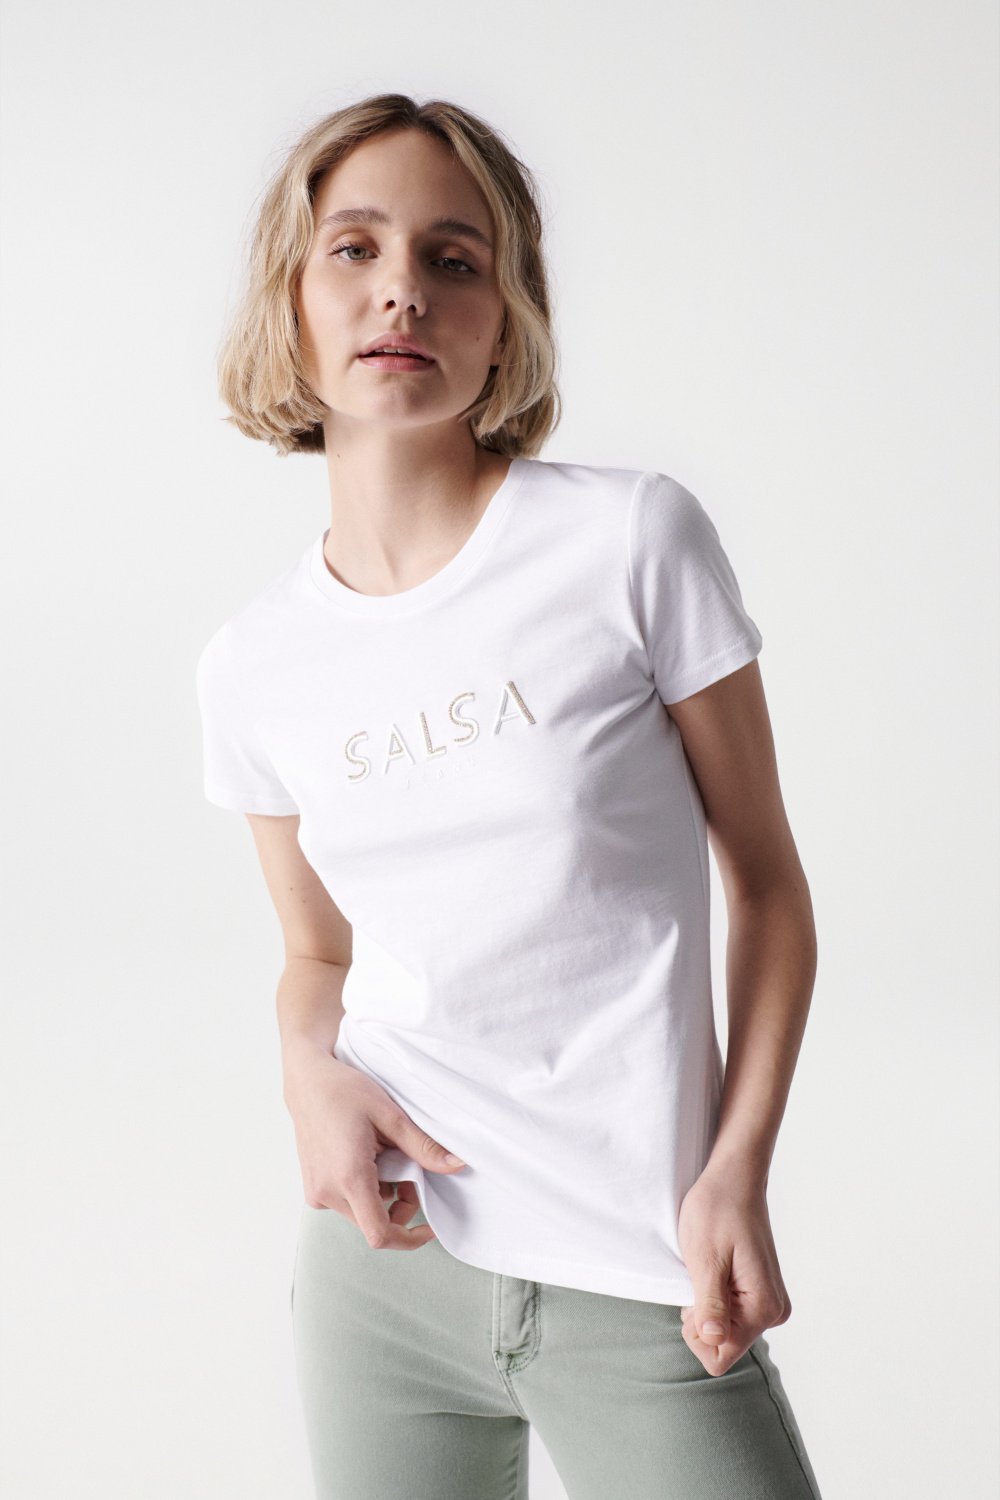 Camiseta blanca con branding - Salsa